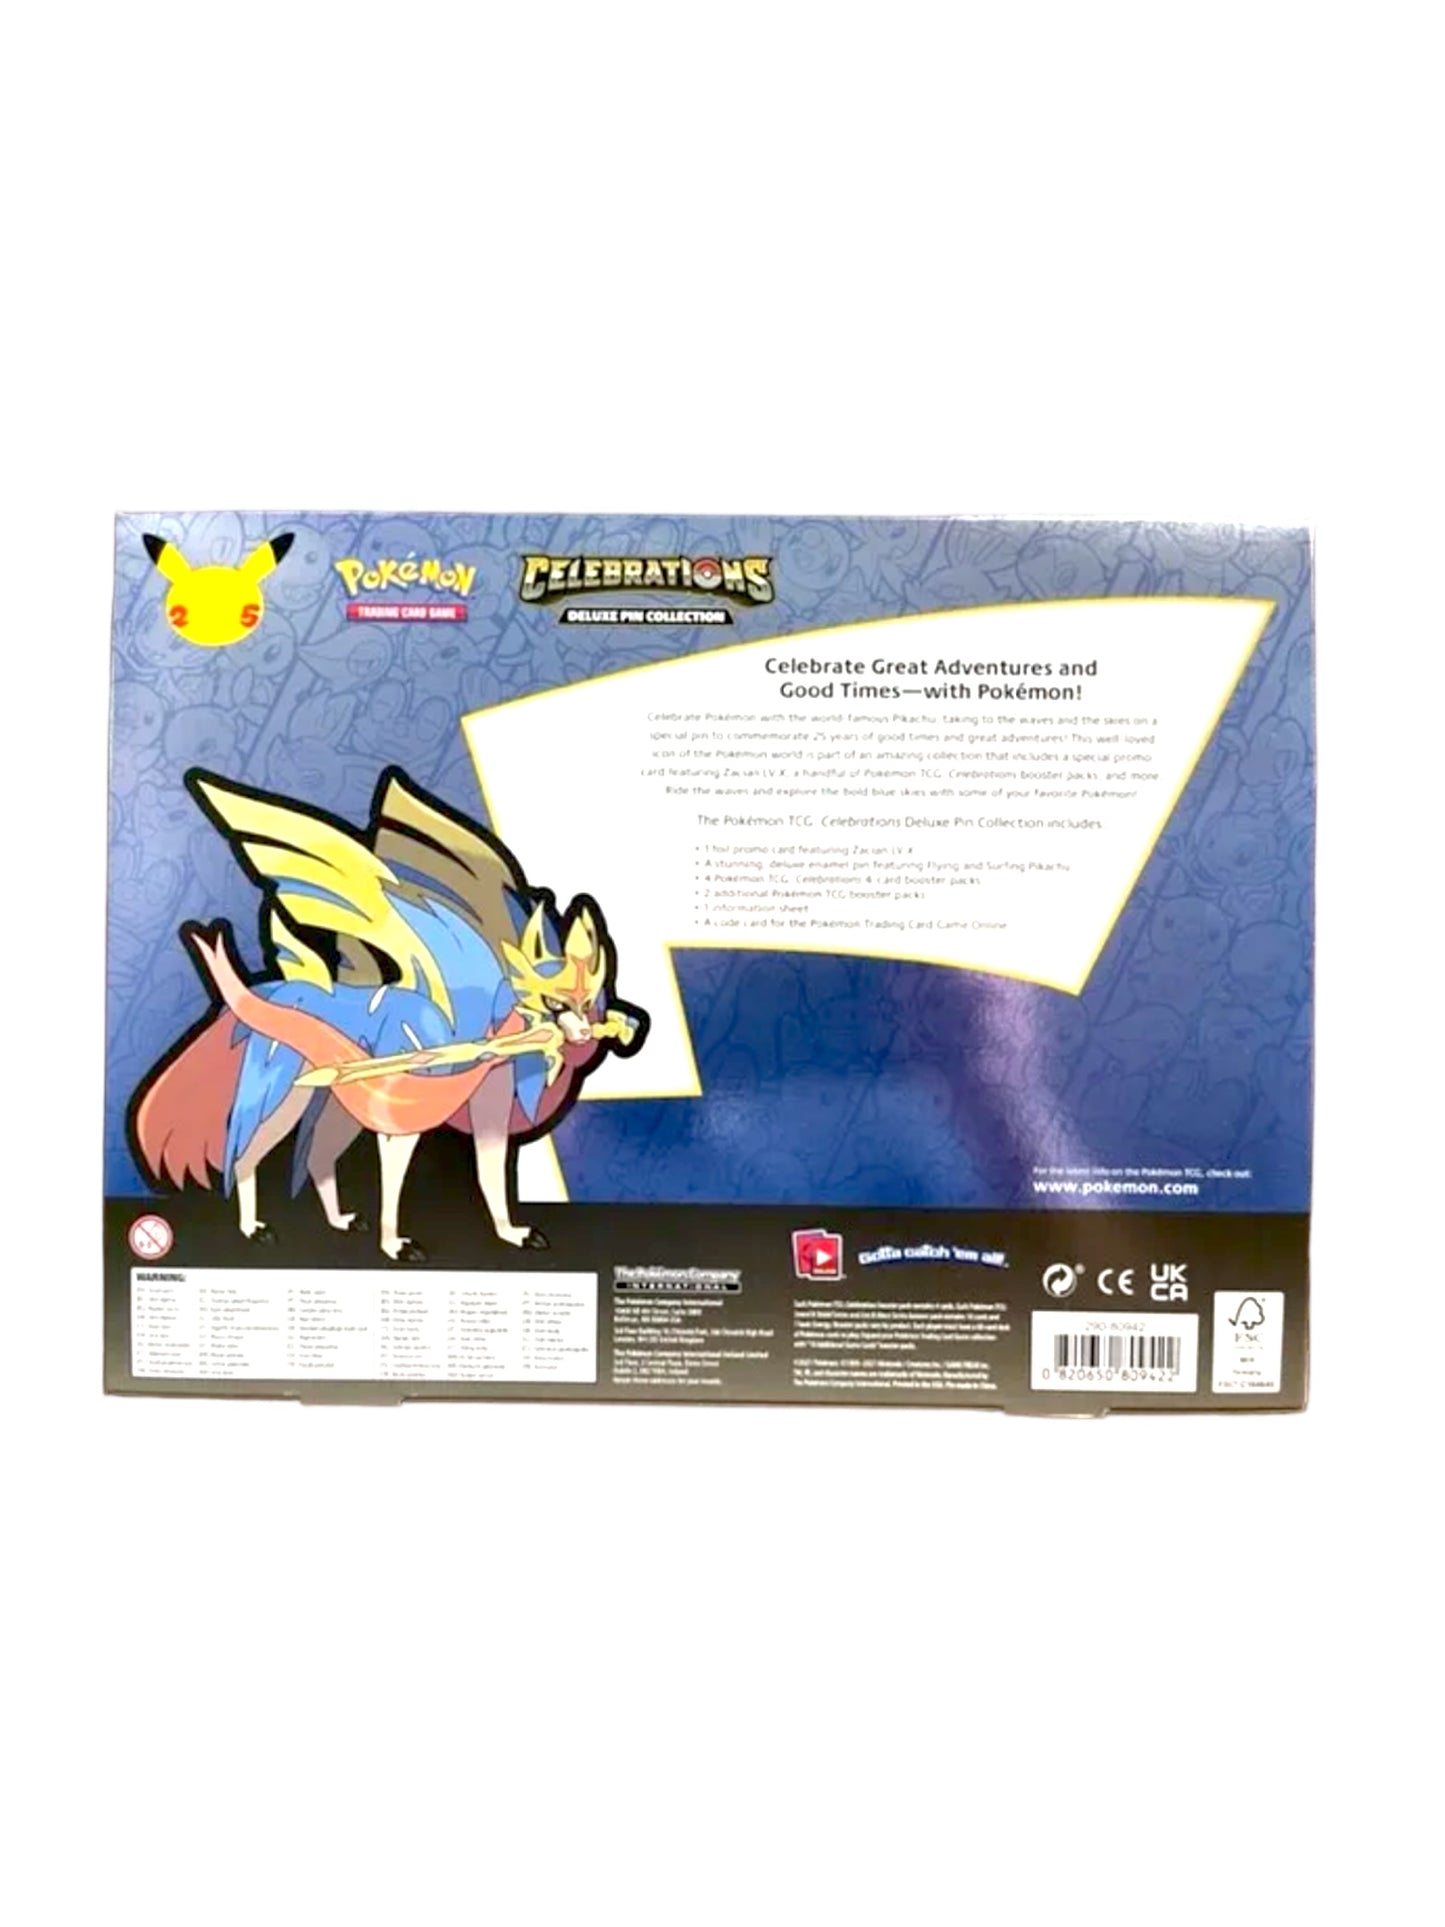 Pokemon Celebrations Deluxe Pin Collection Case Box Set Zacian